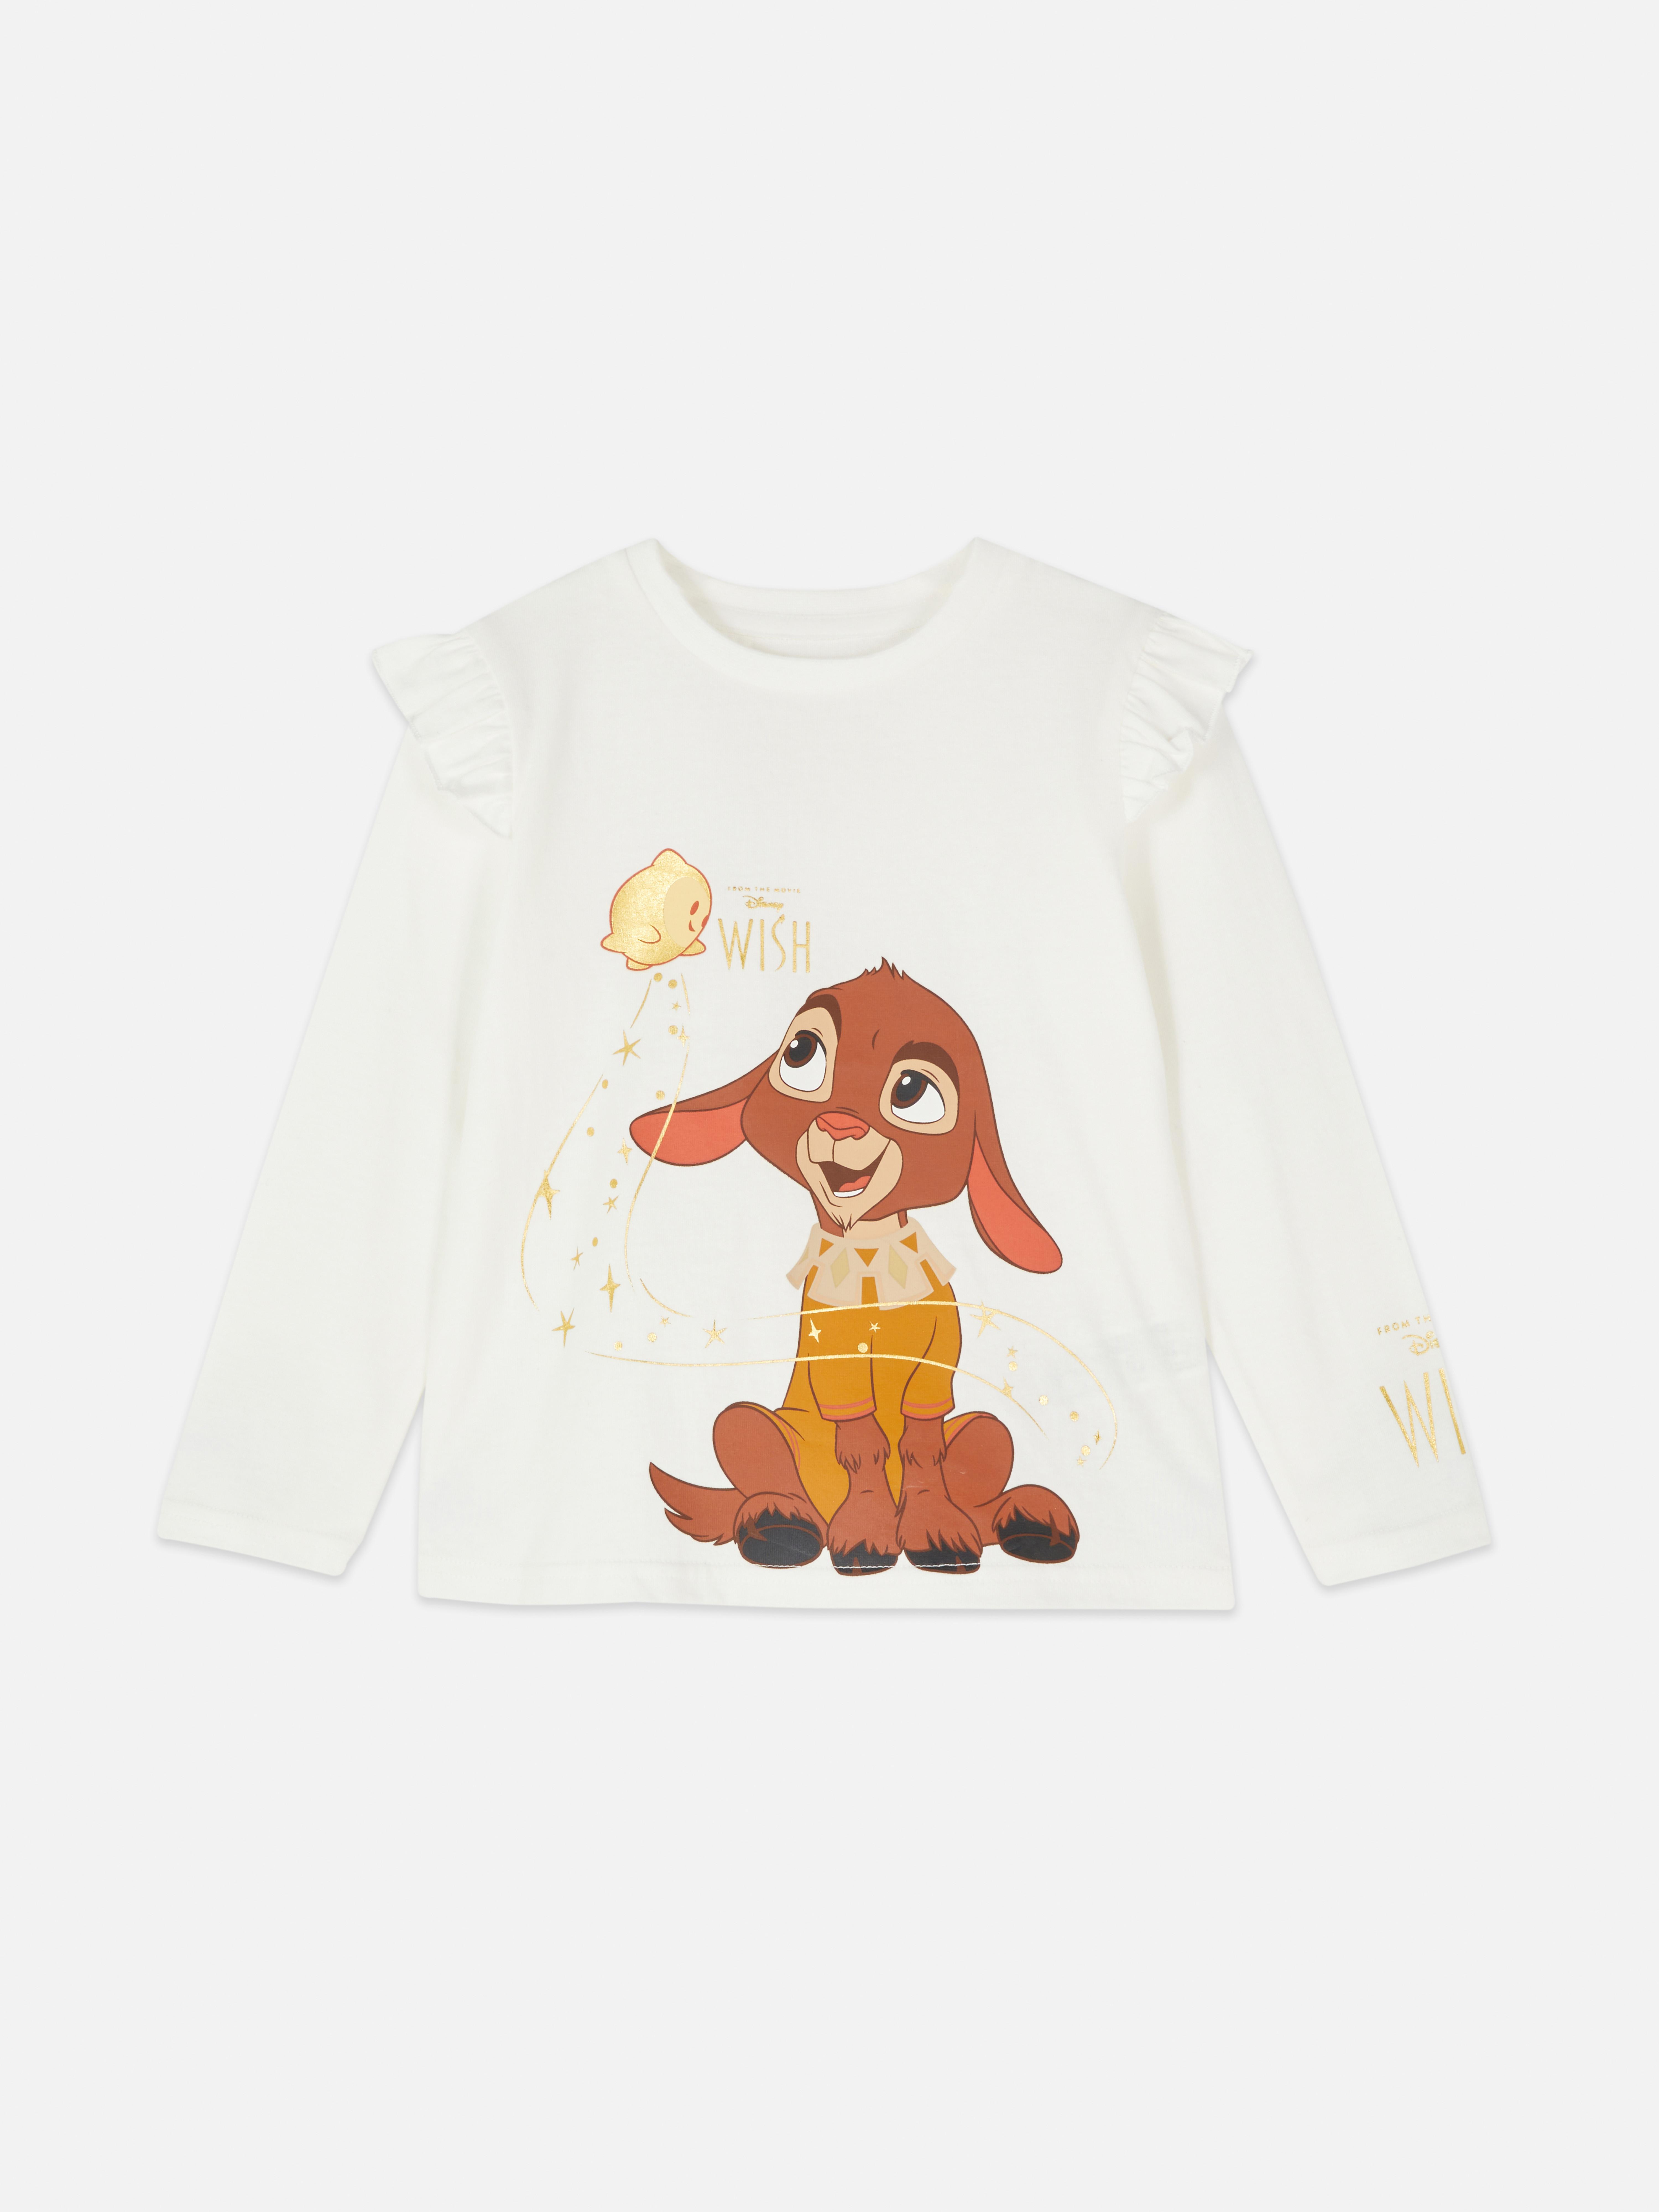 Disney’s Wish Ruffle T-shirt